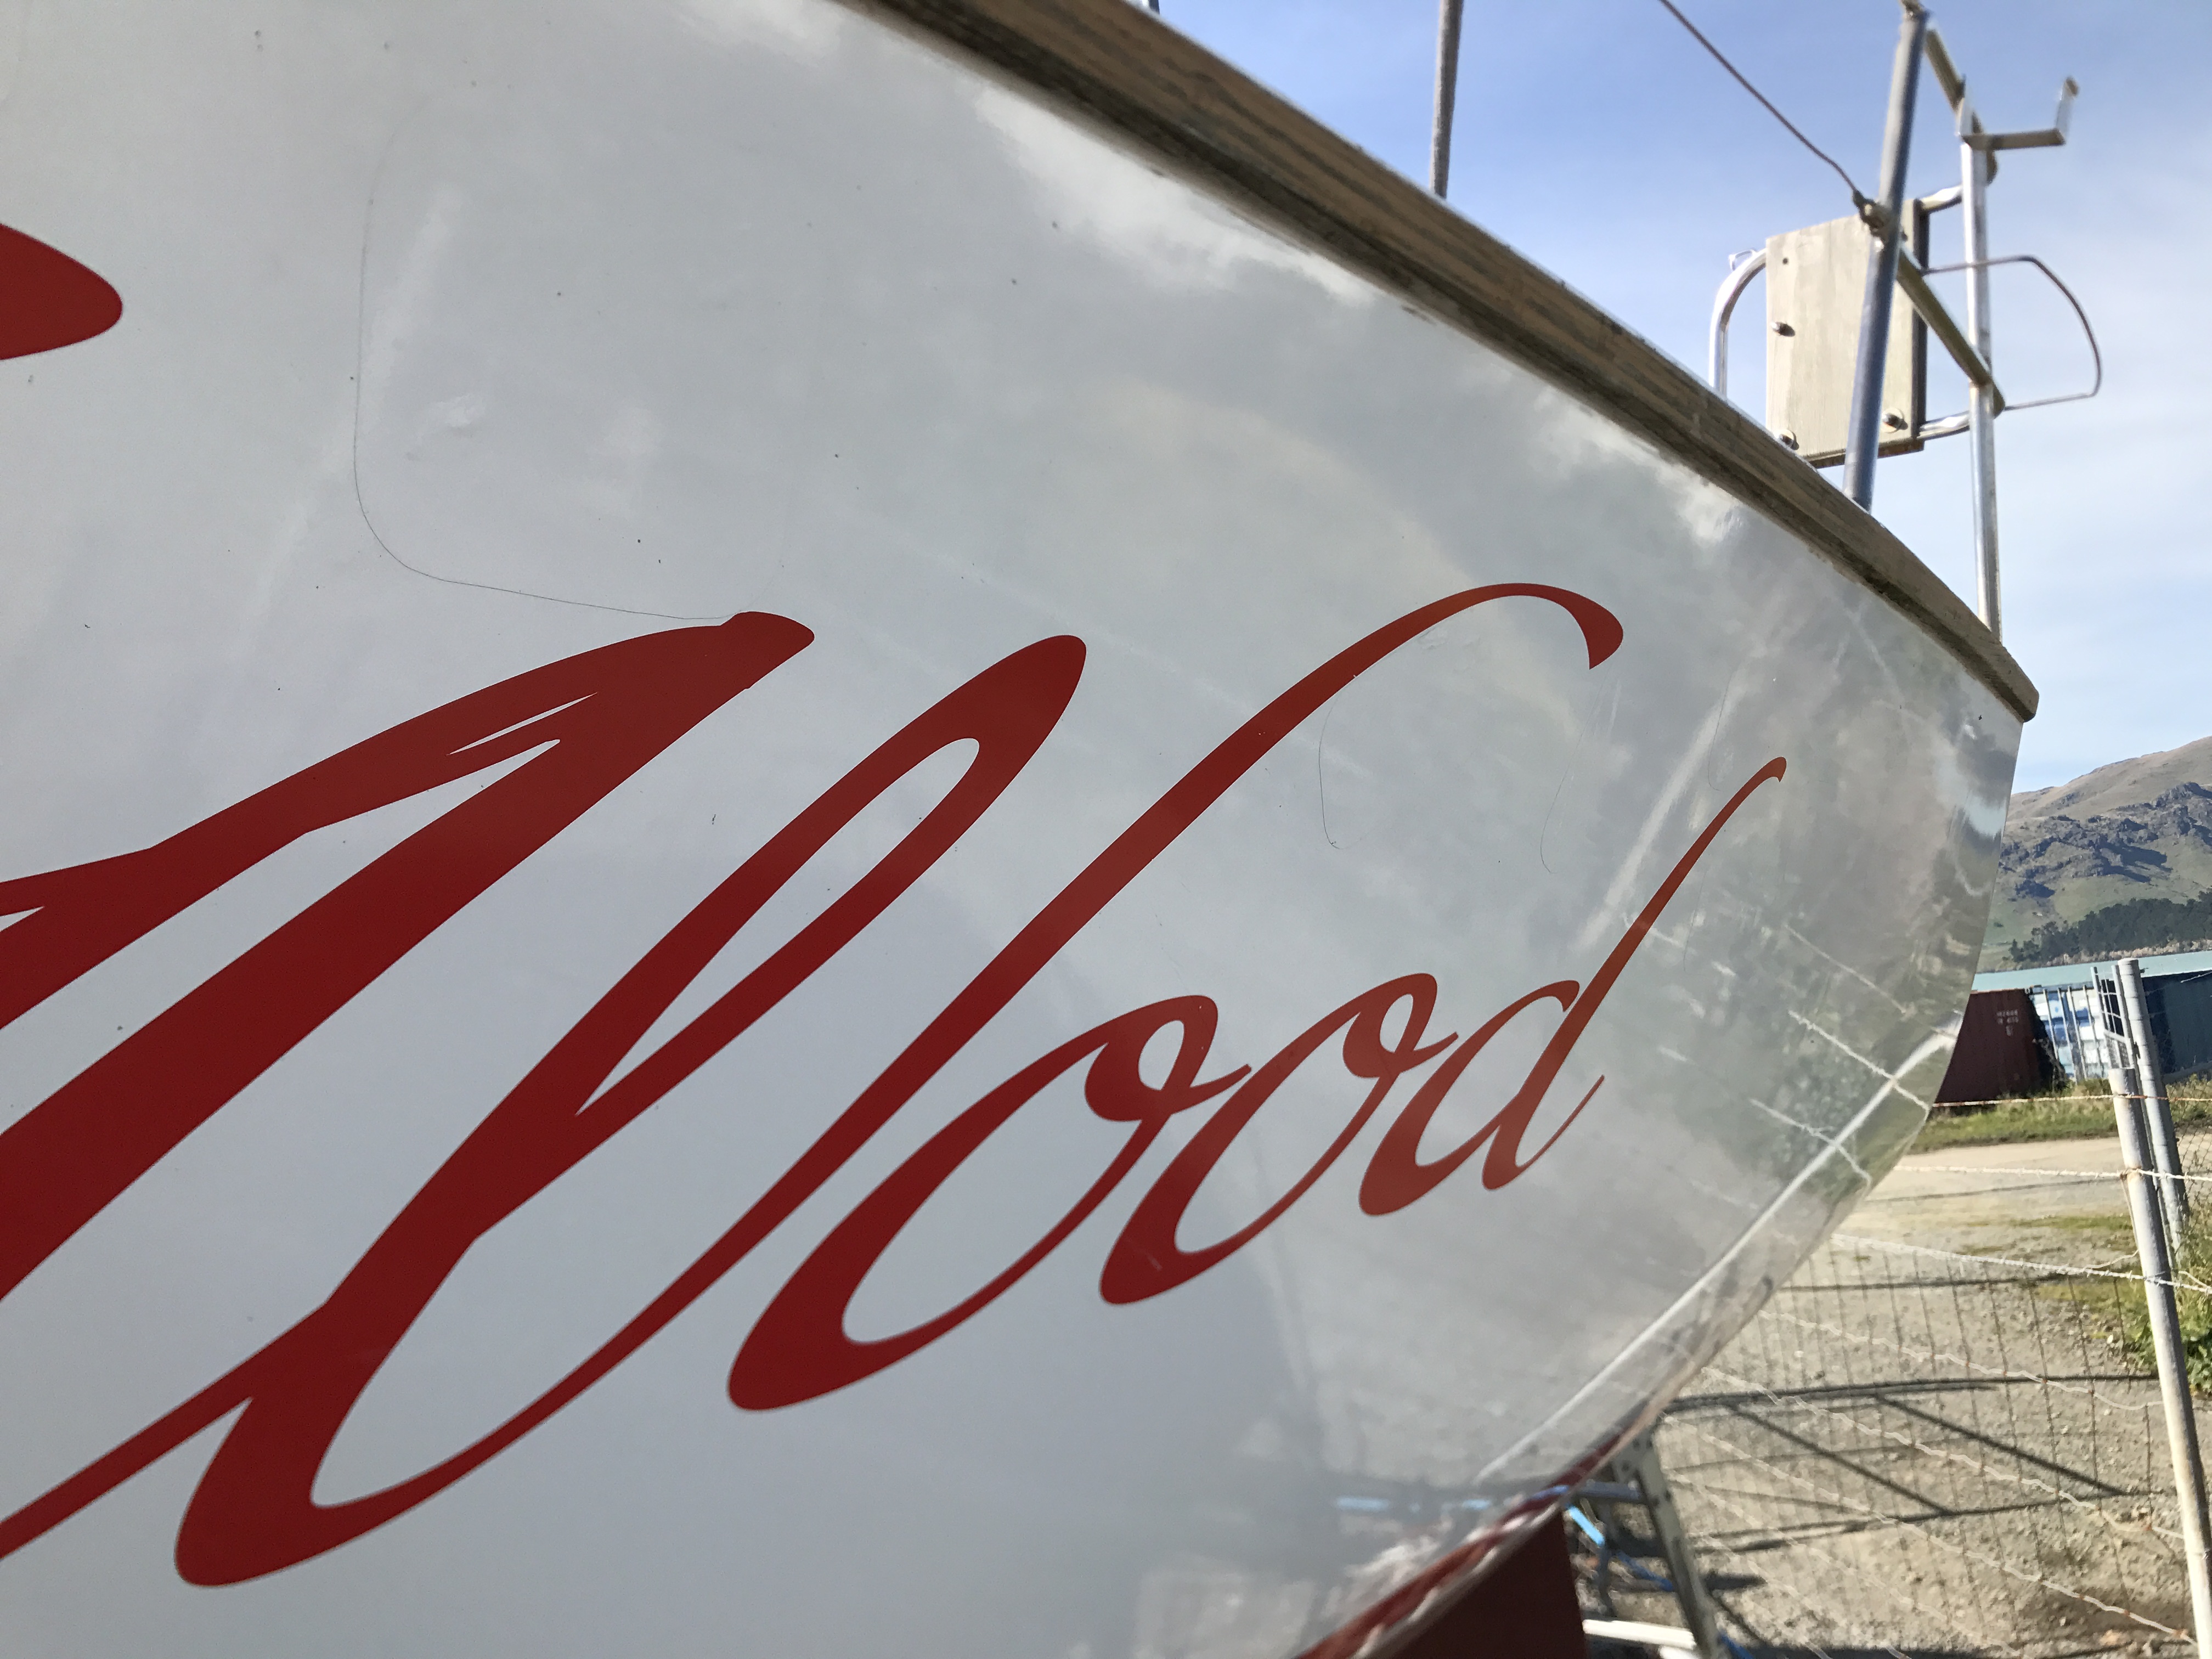 Wildwood’s Boat Wrap – 3 Years On